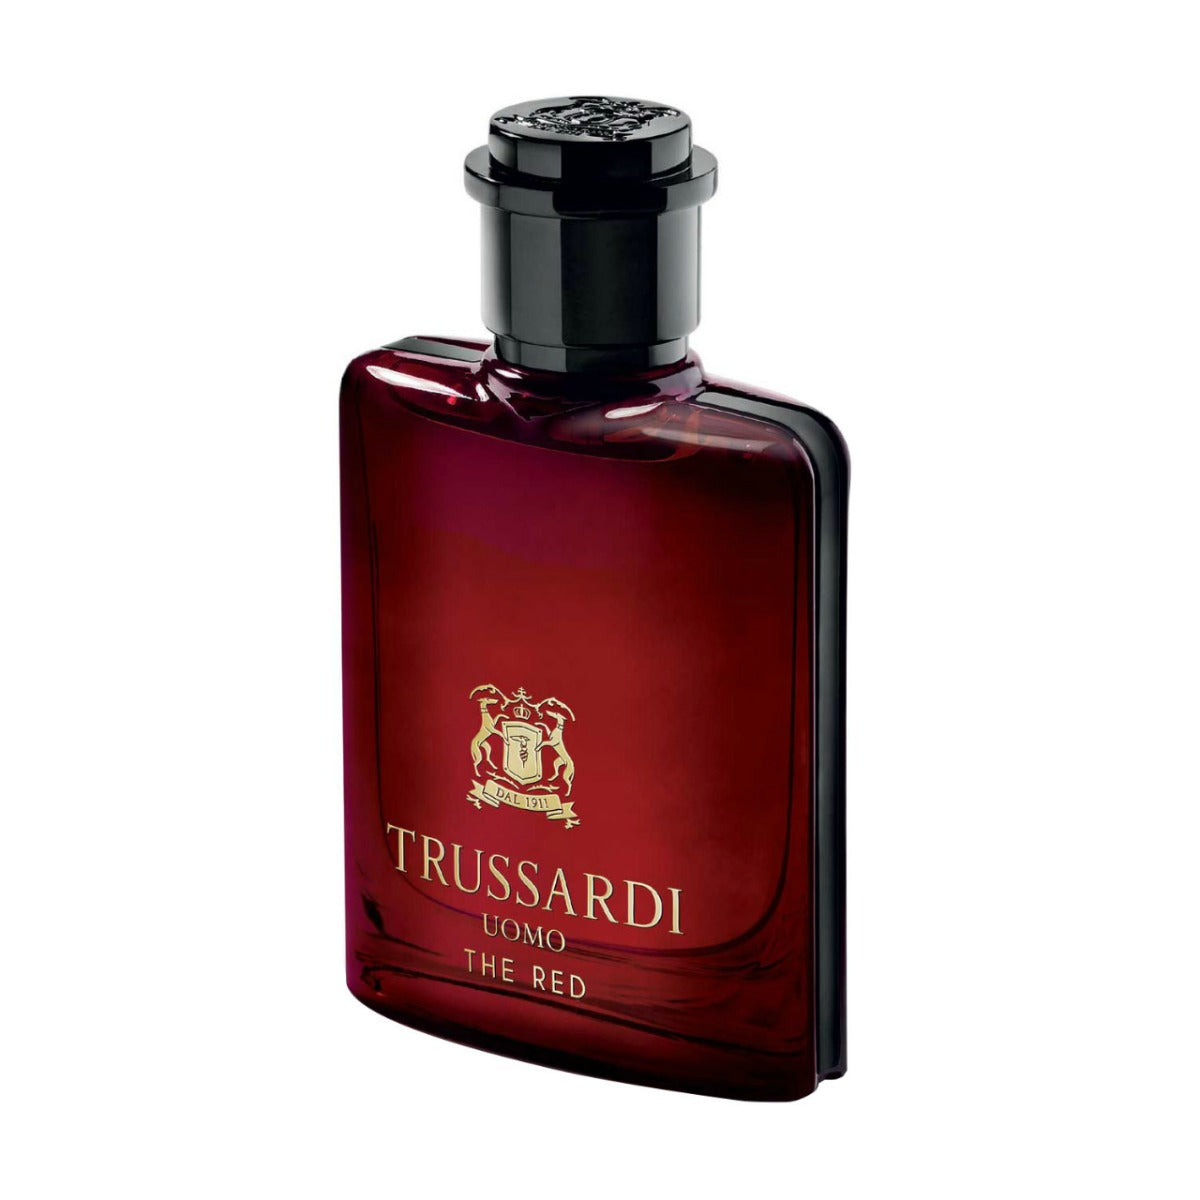 TRUSSARDI UOMO THE RED FOR MEN EDT 100 ml - samawa perfumes 